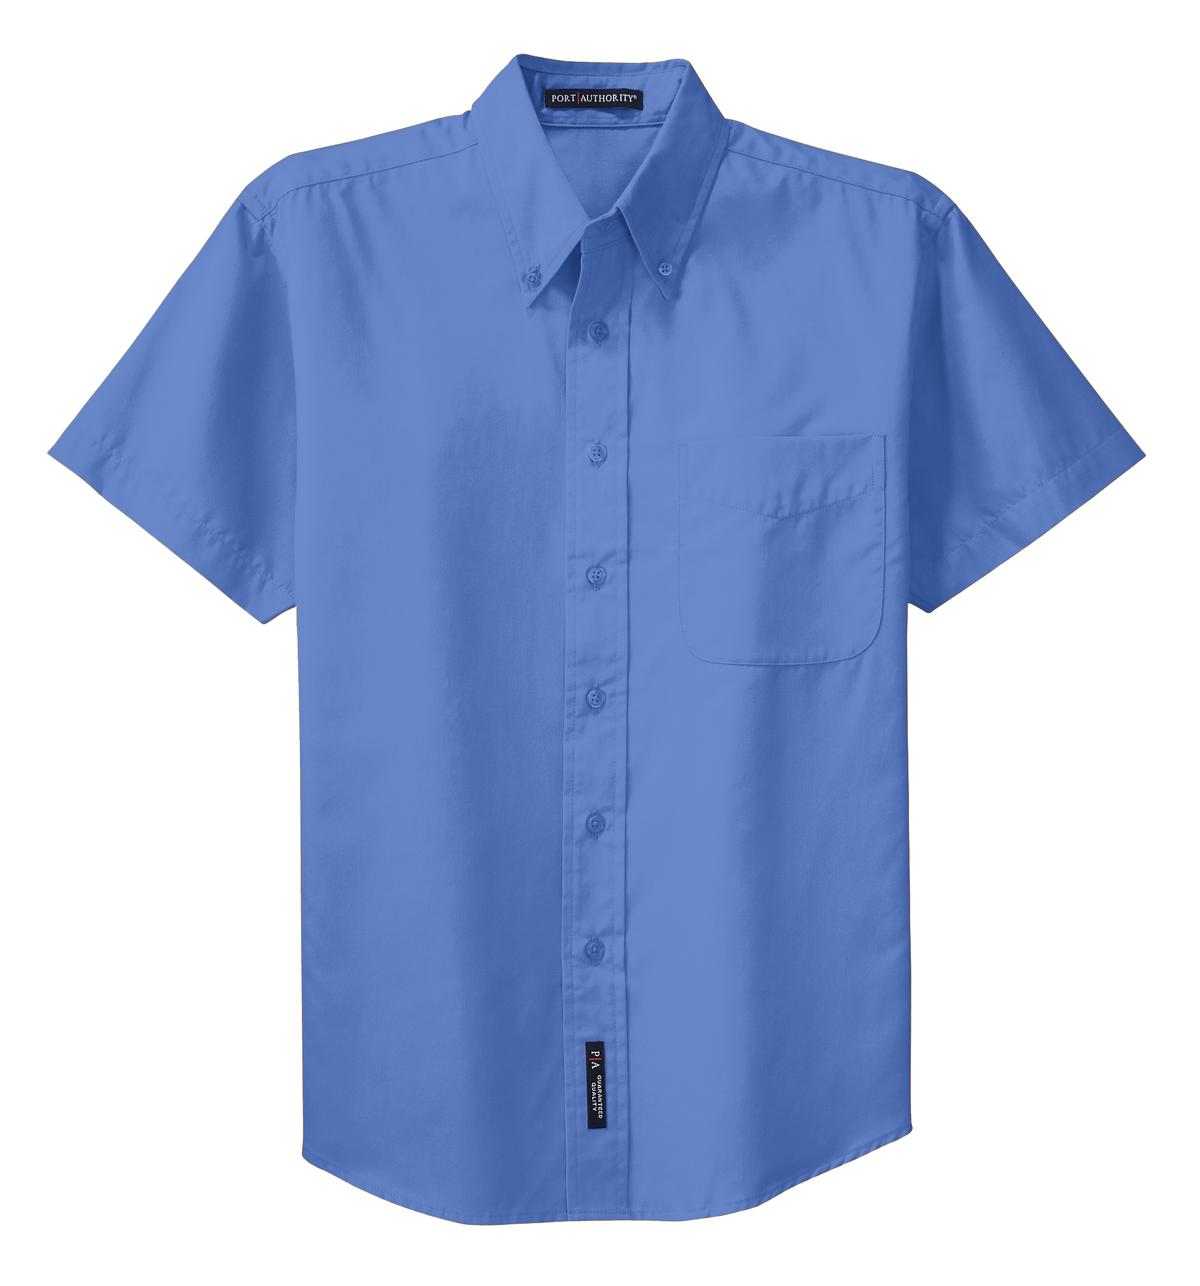 Port Authority S508 Short Sleeve Easy Care Shirt - Ultramarine Blue - HIT a Double - 5